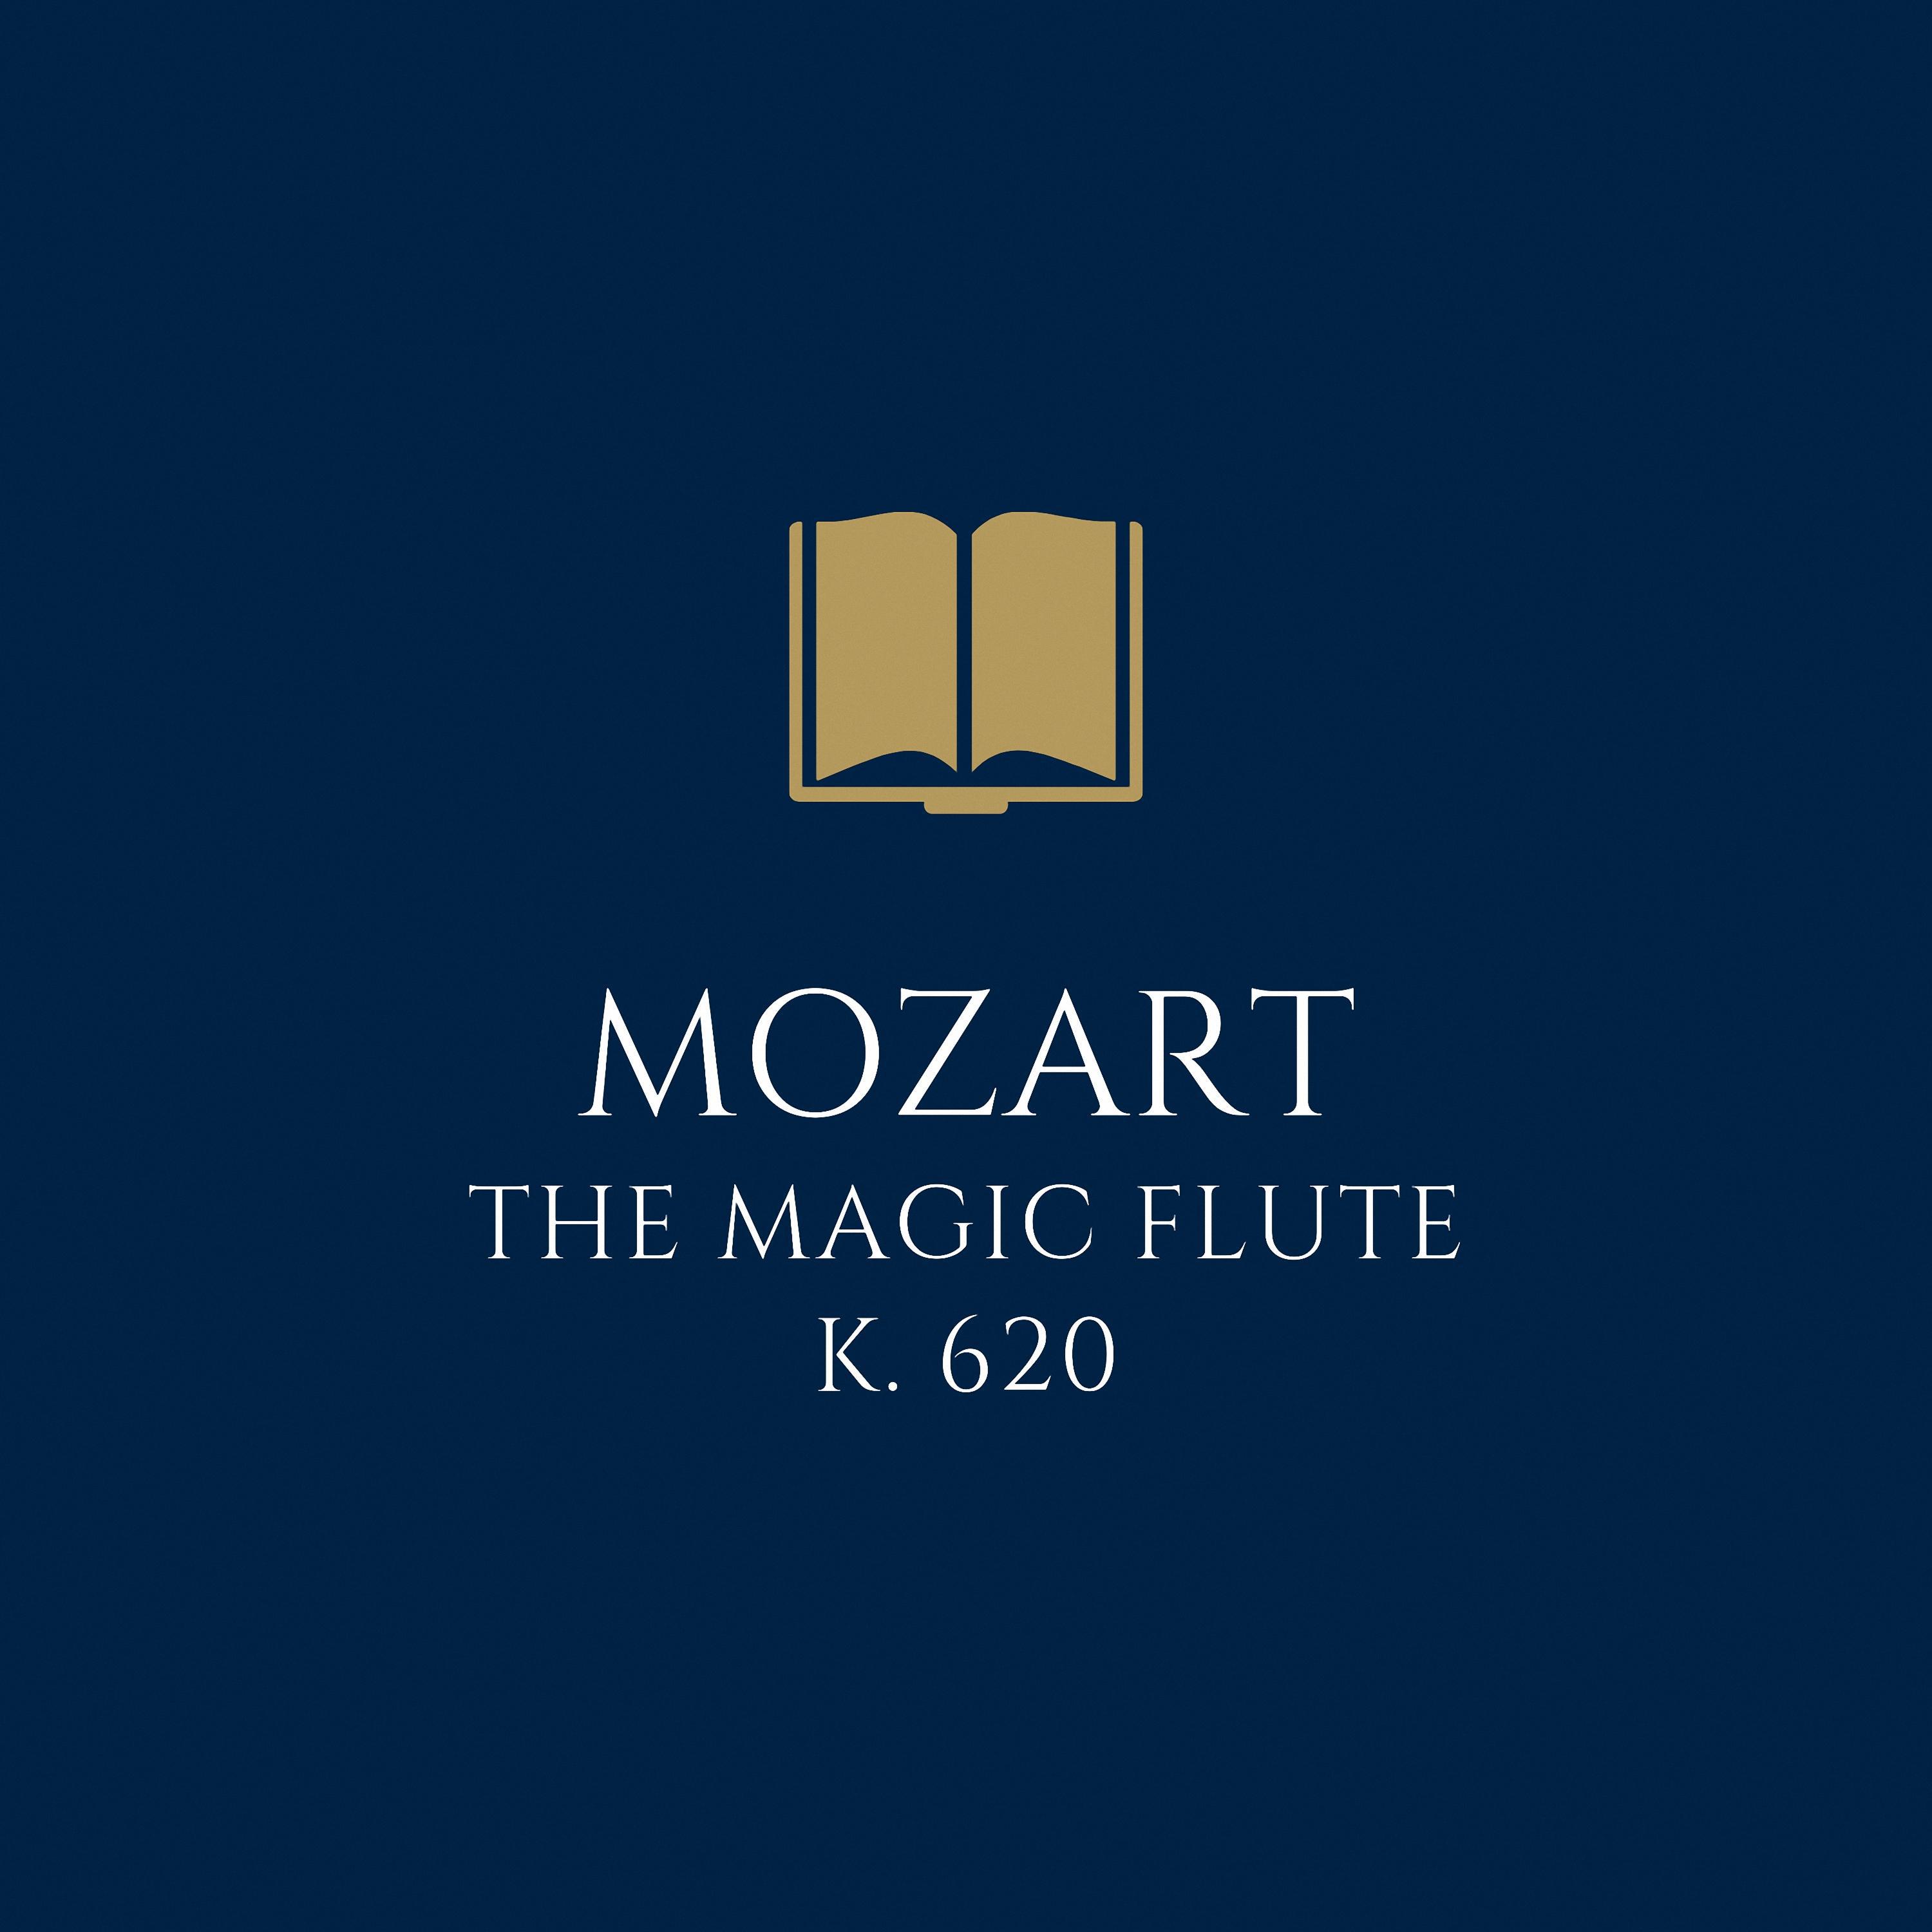 The Magic Flute, K. 620: Overture